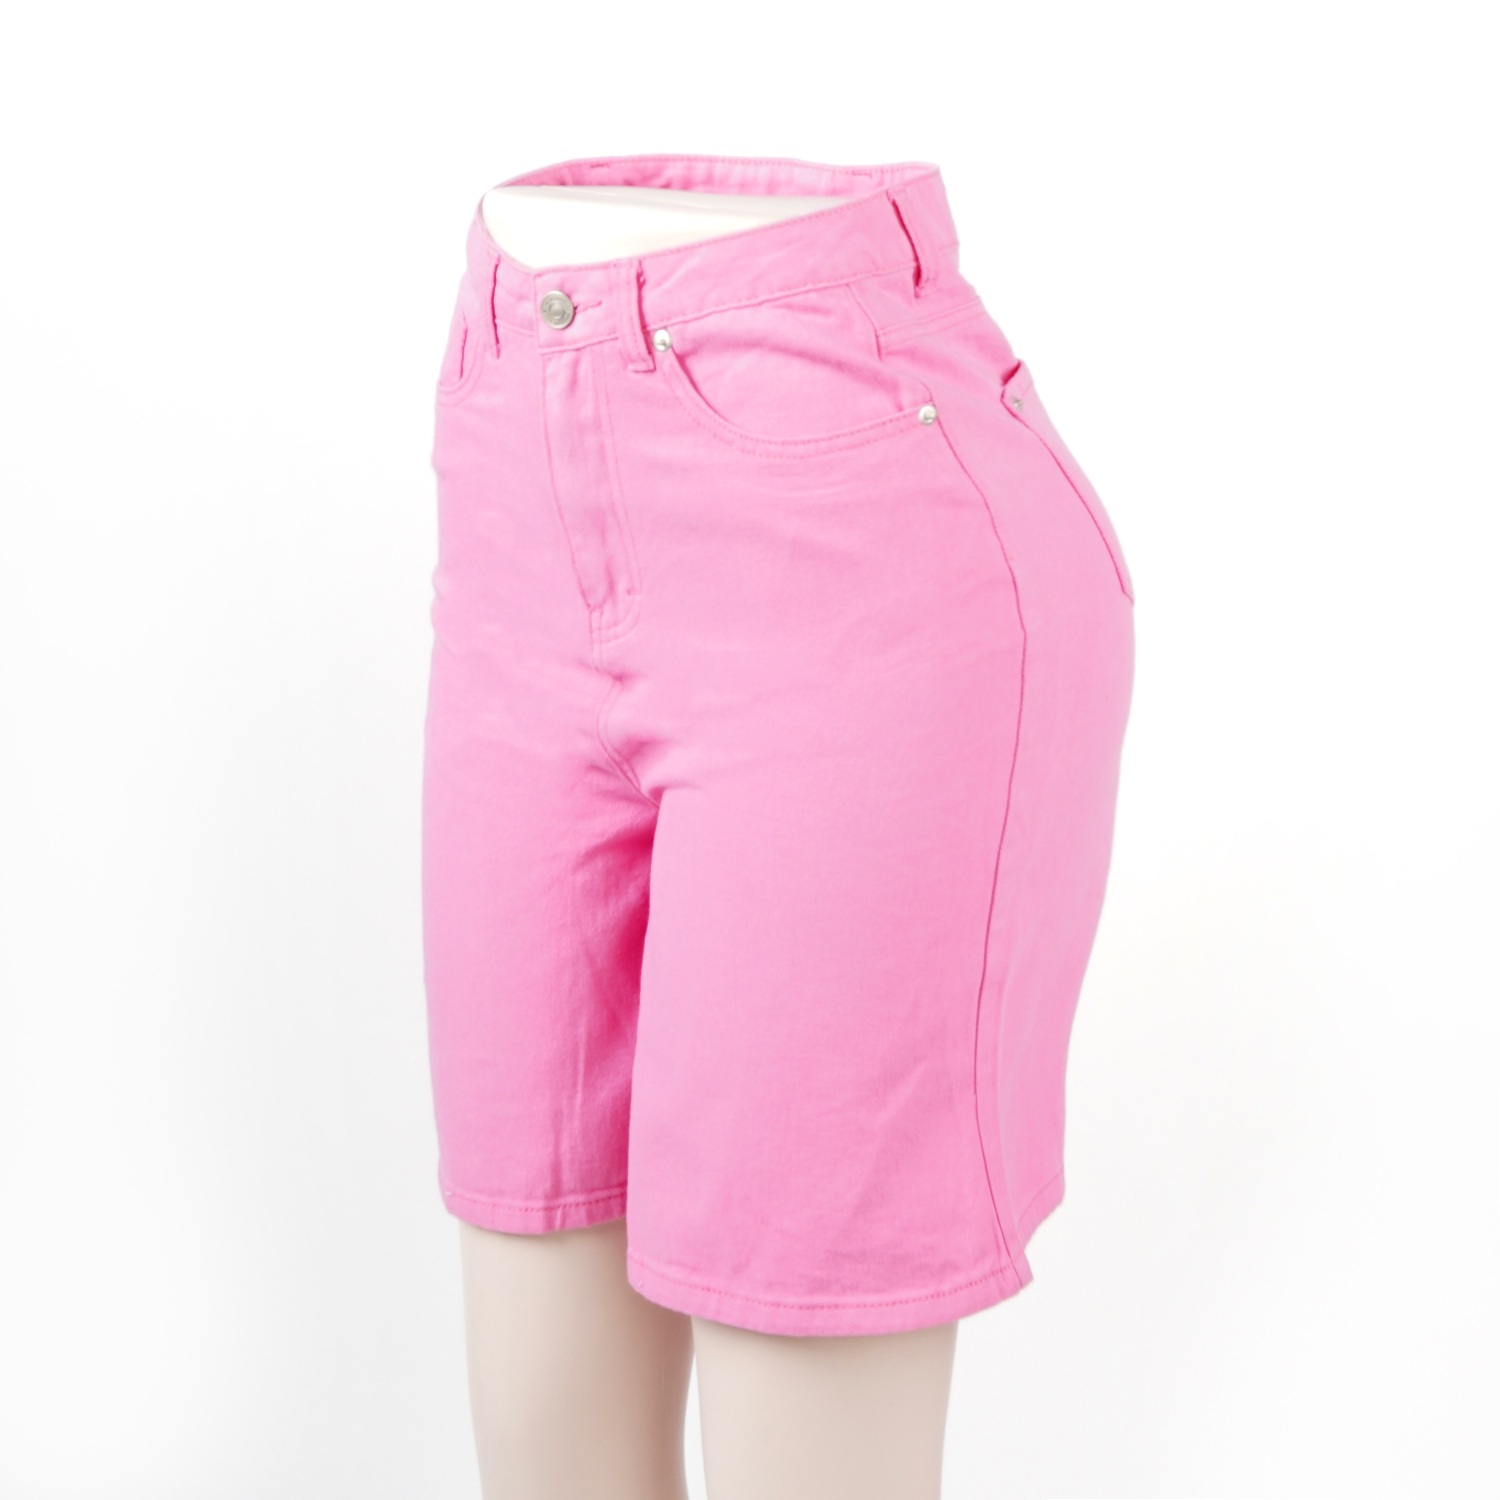 SKYKINGDOM high quality new design women shorts fit slim pink denim shorts women